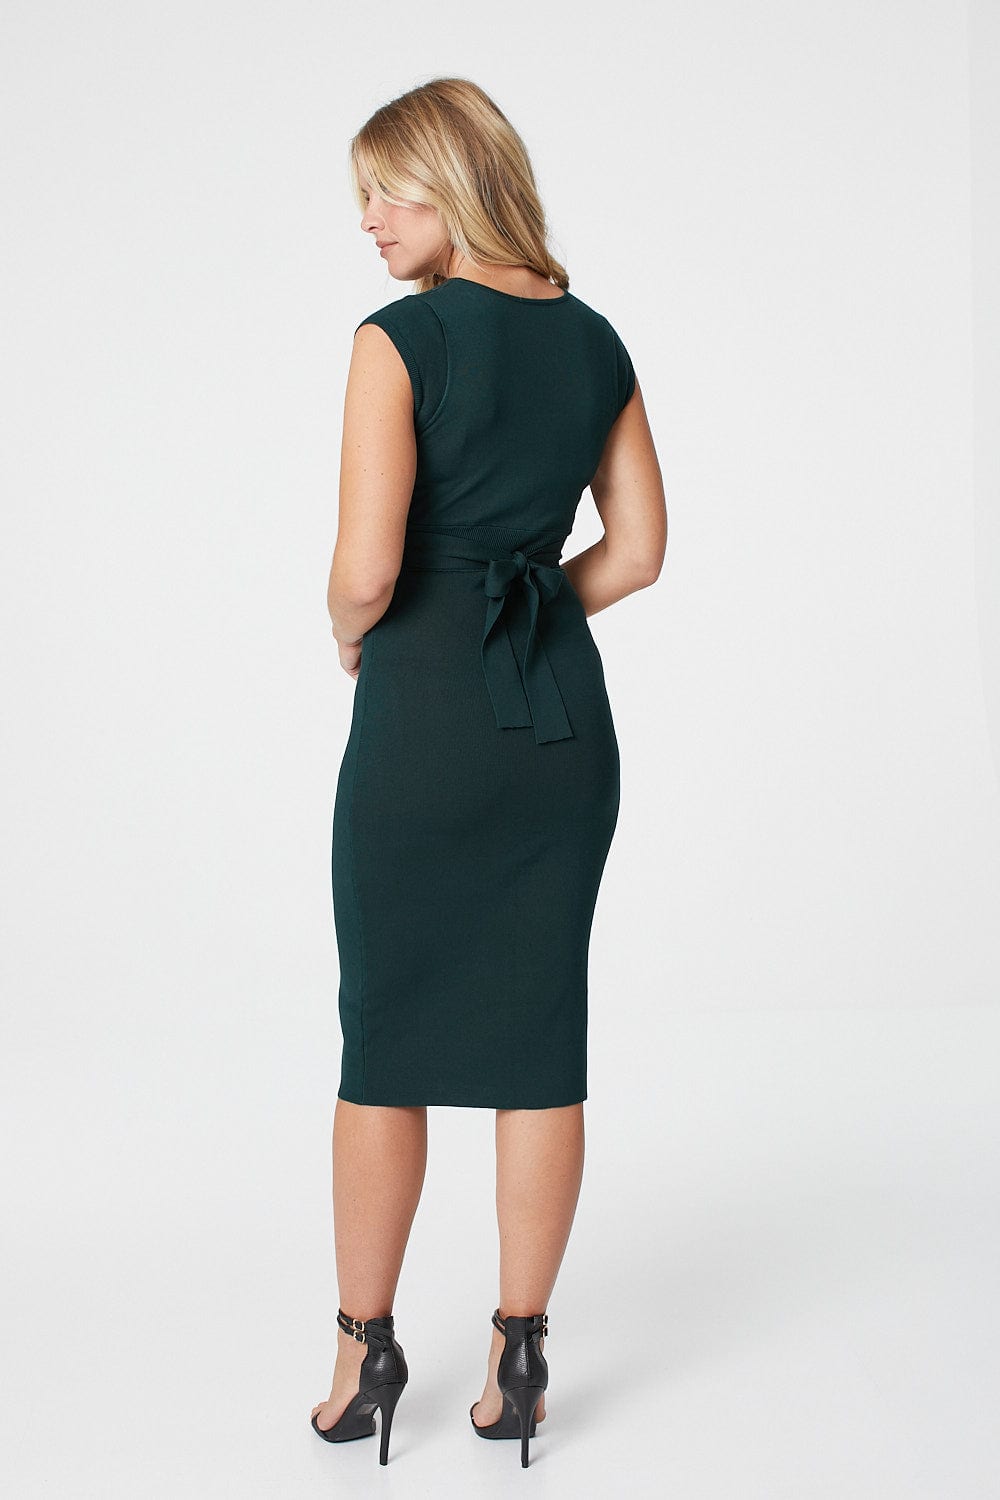 Green | Sleeveless Bodycon Knit Dress